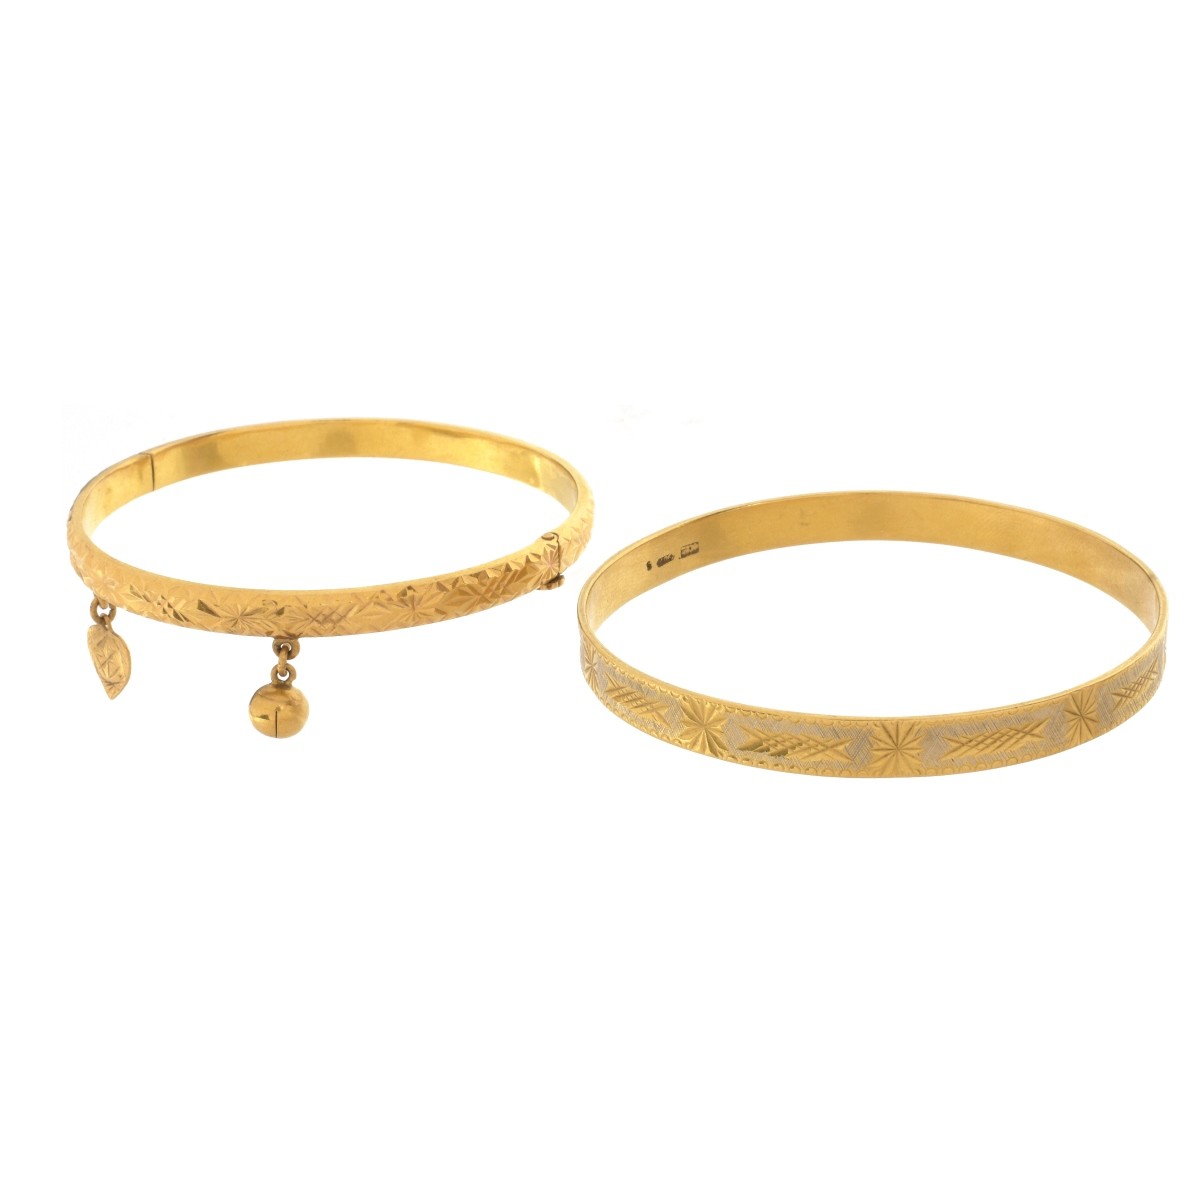 Two Gold Bangle Bracelets